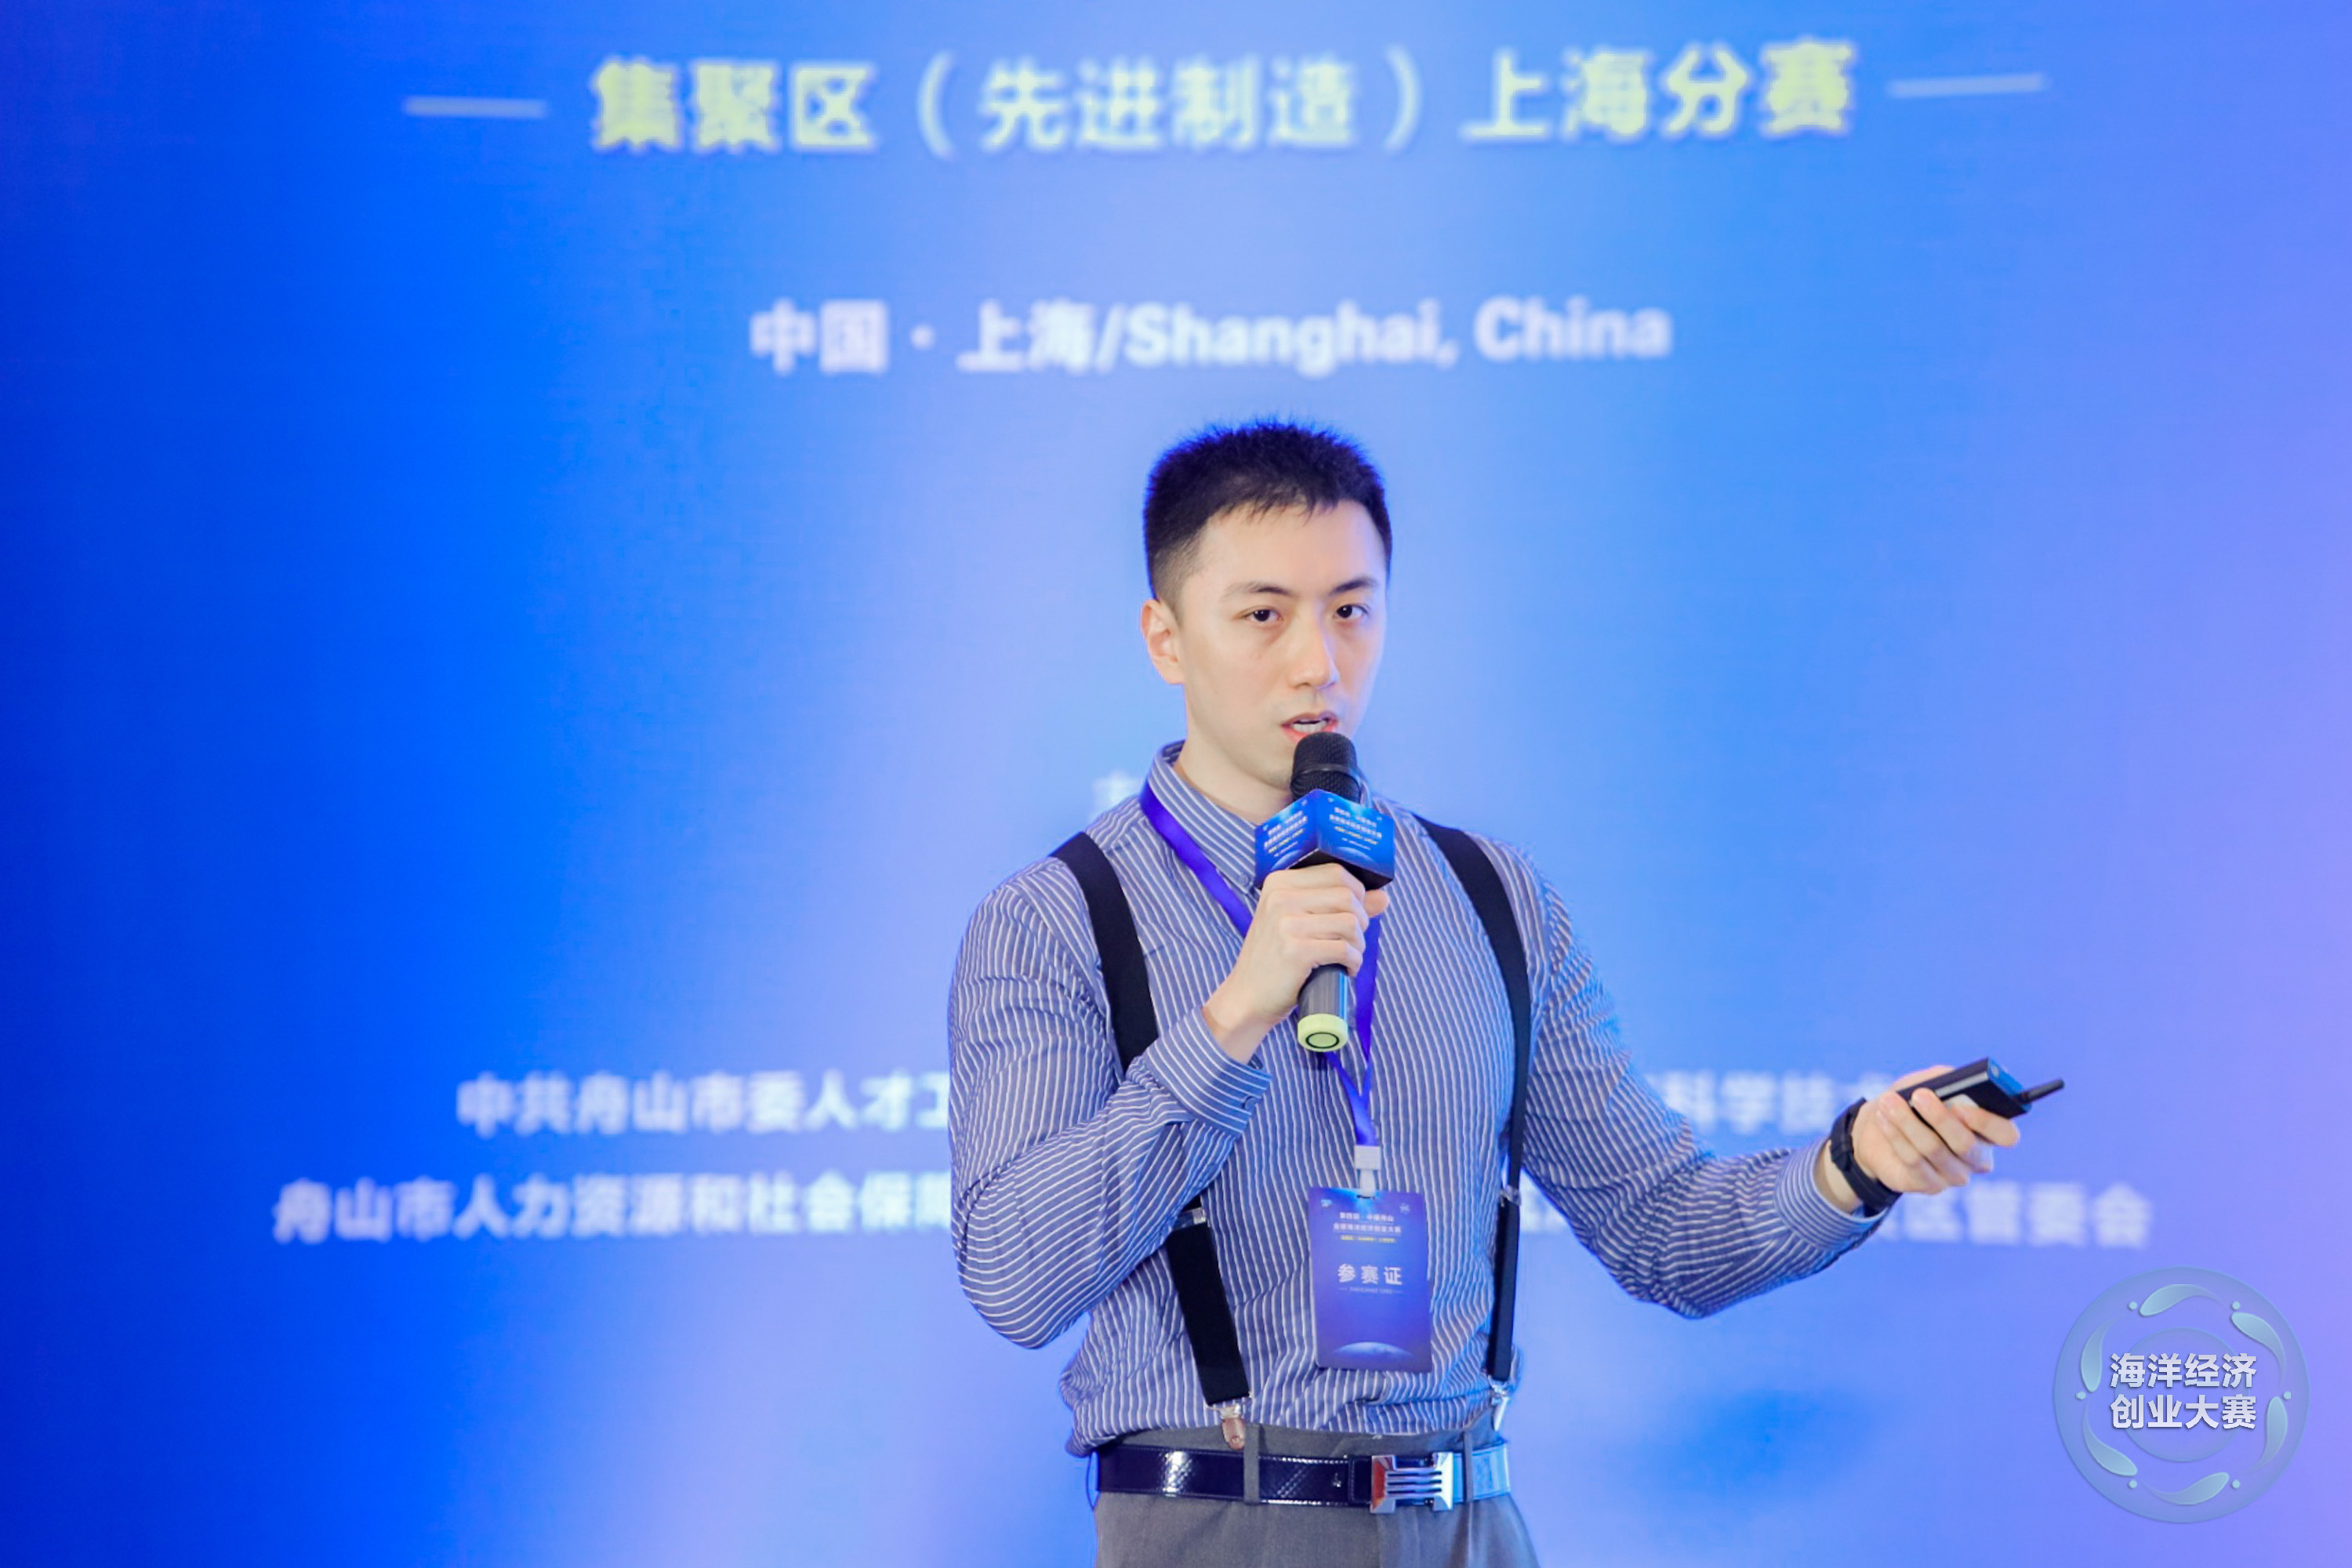 We attend the 4th session China Zhoushan Global Marine Economy Entrepreneurship Competition.